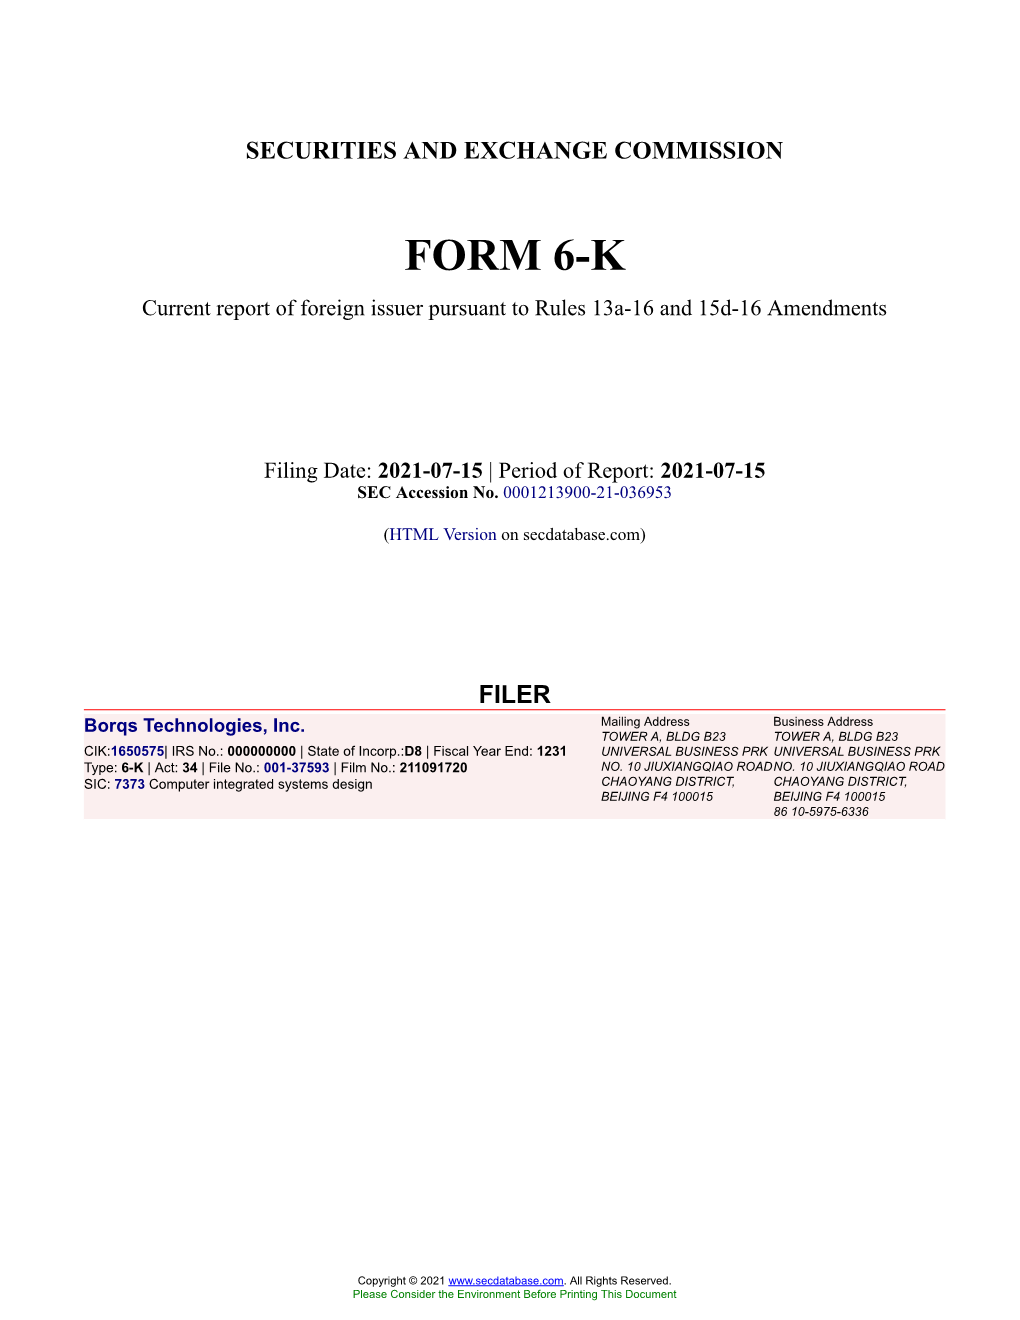 Borqs Technologies, Inc. Form 6-K Current Event Report Filed 2021-07-15